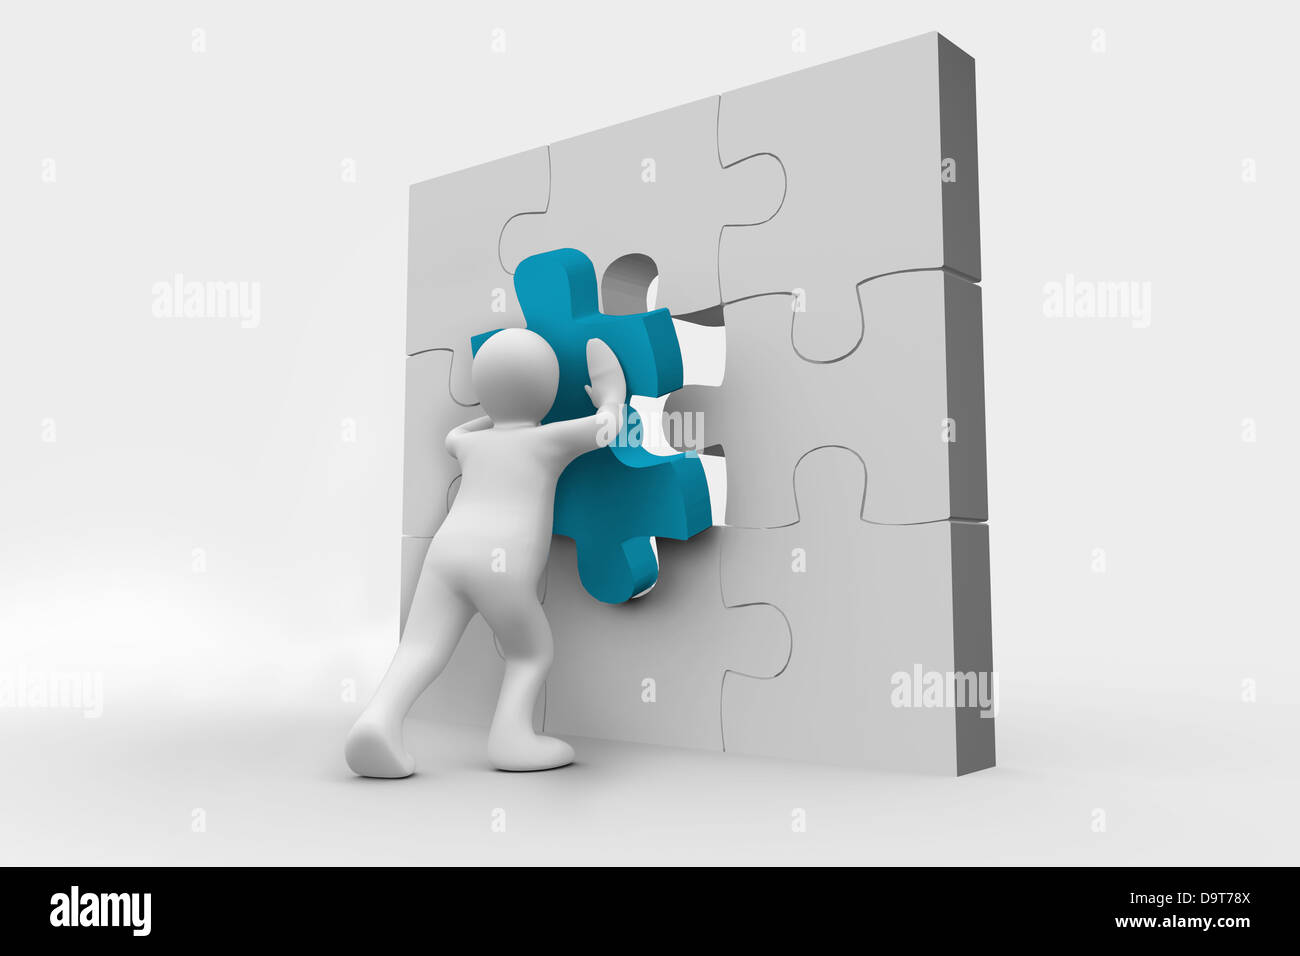 Human representation resolving a jigsaw puzzle Stock Photo